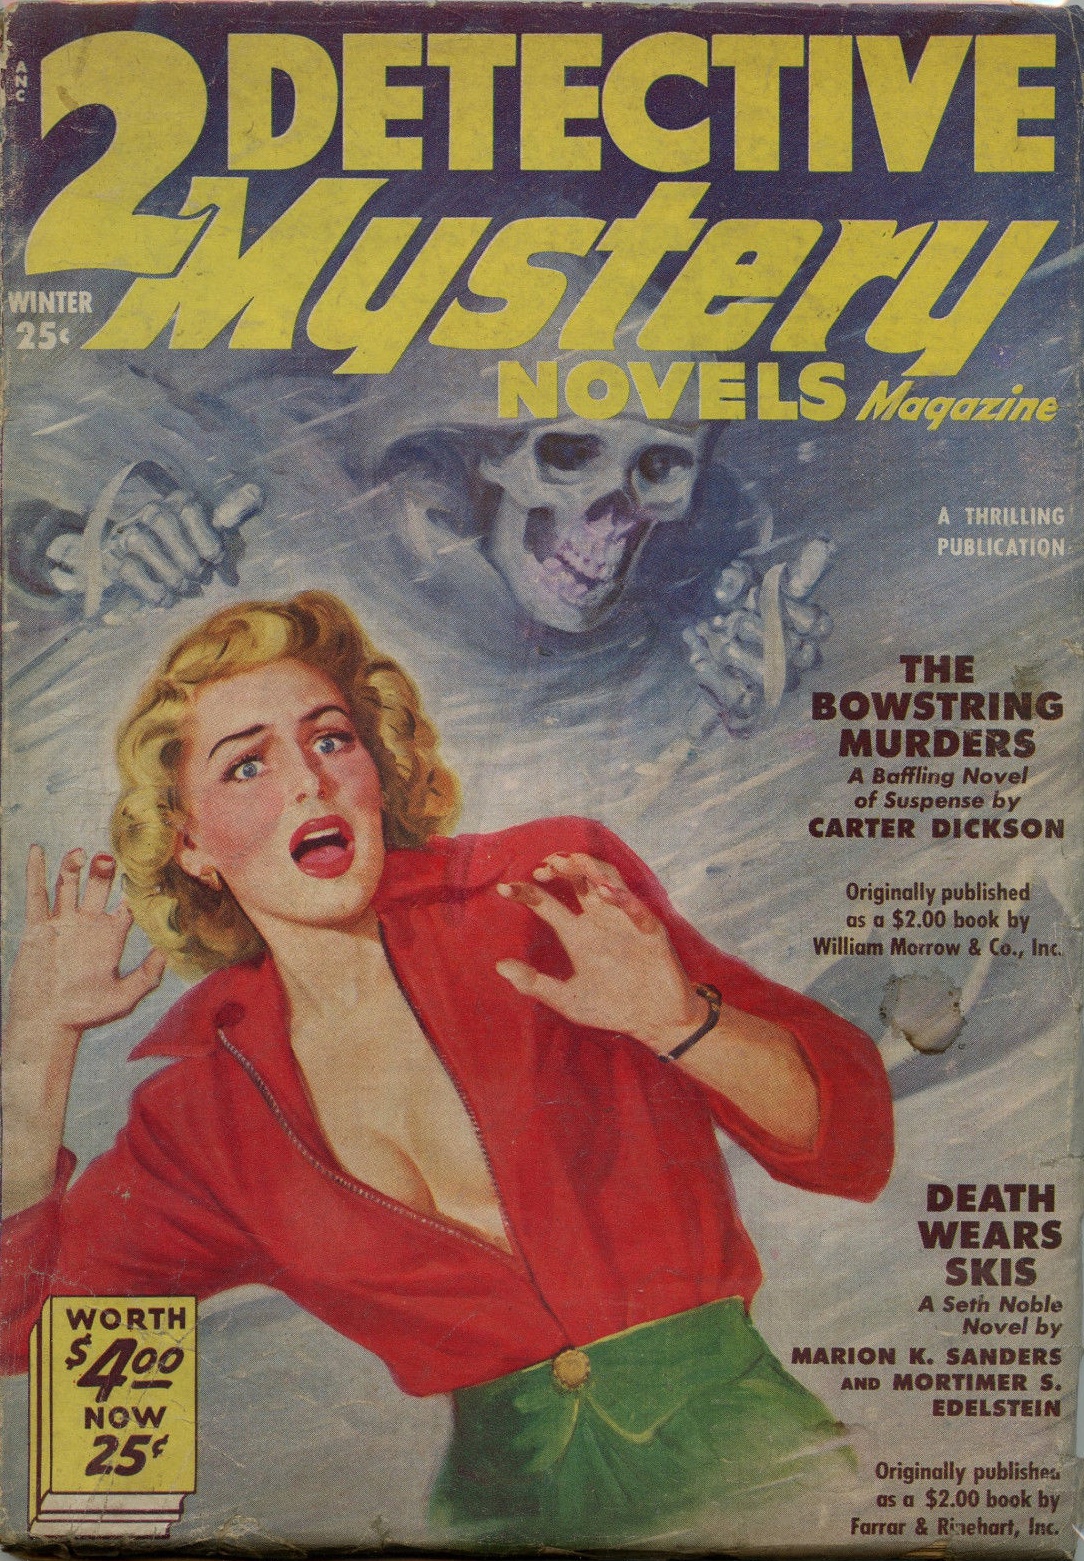 2 Detective Mystery Novels Magazine - Winter 1951